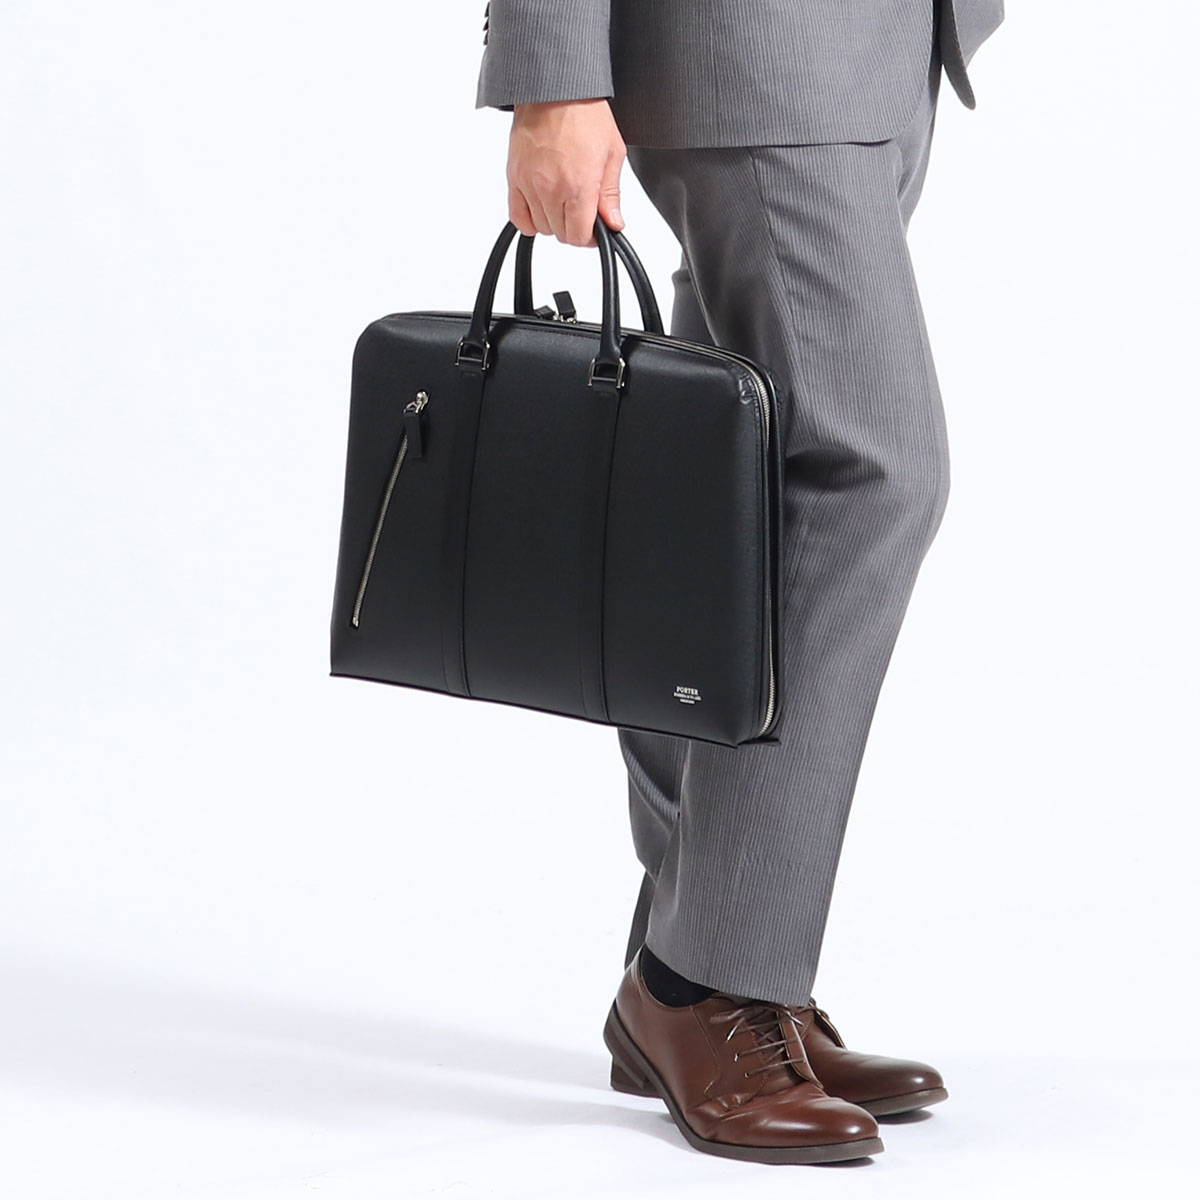 PORTER Avenue briefcase - ビジネスバッグ